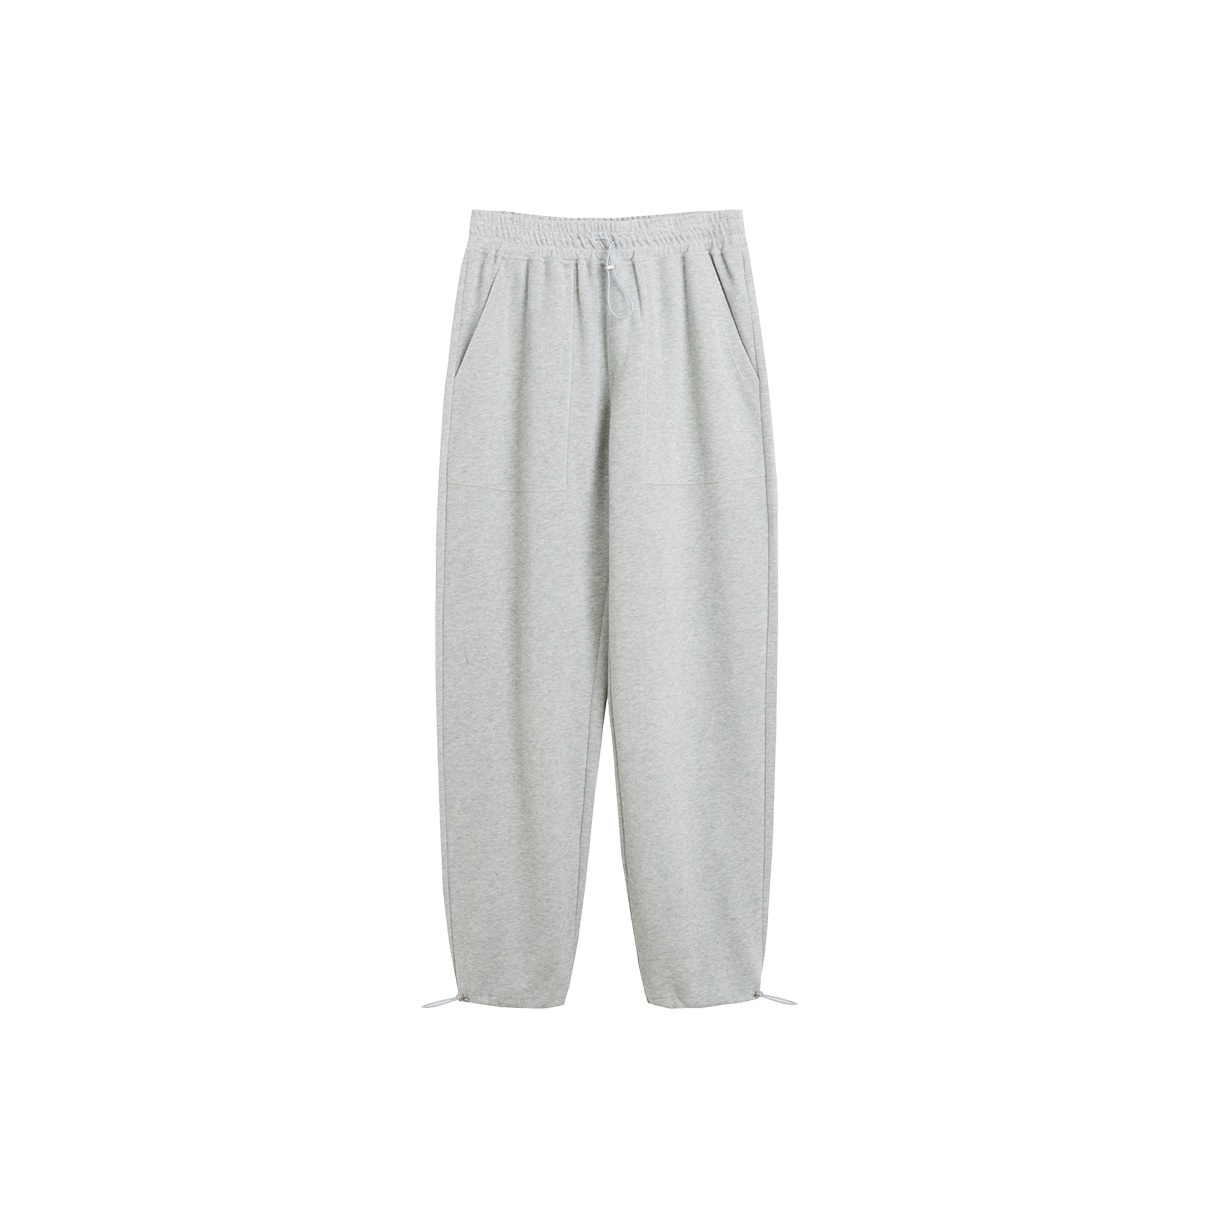 Pants for Women's & Men's | Buy Pants & New Pants - POIZON